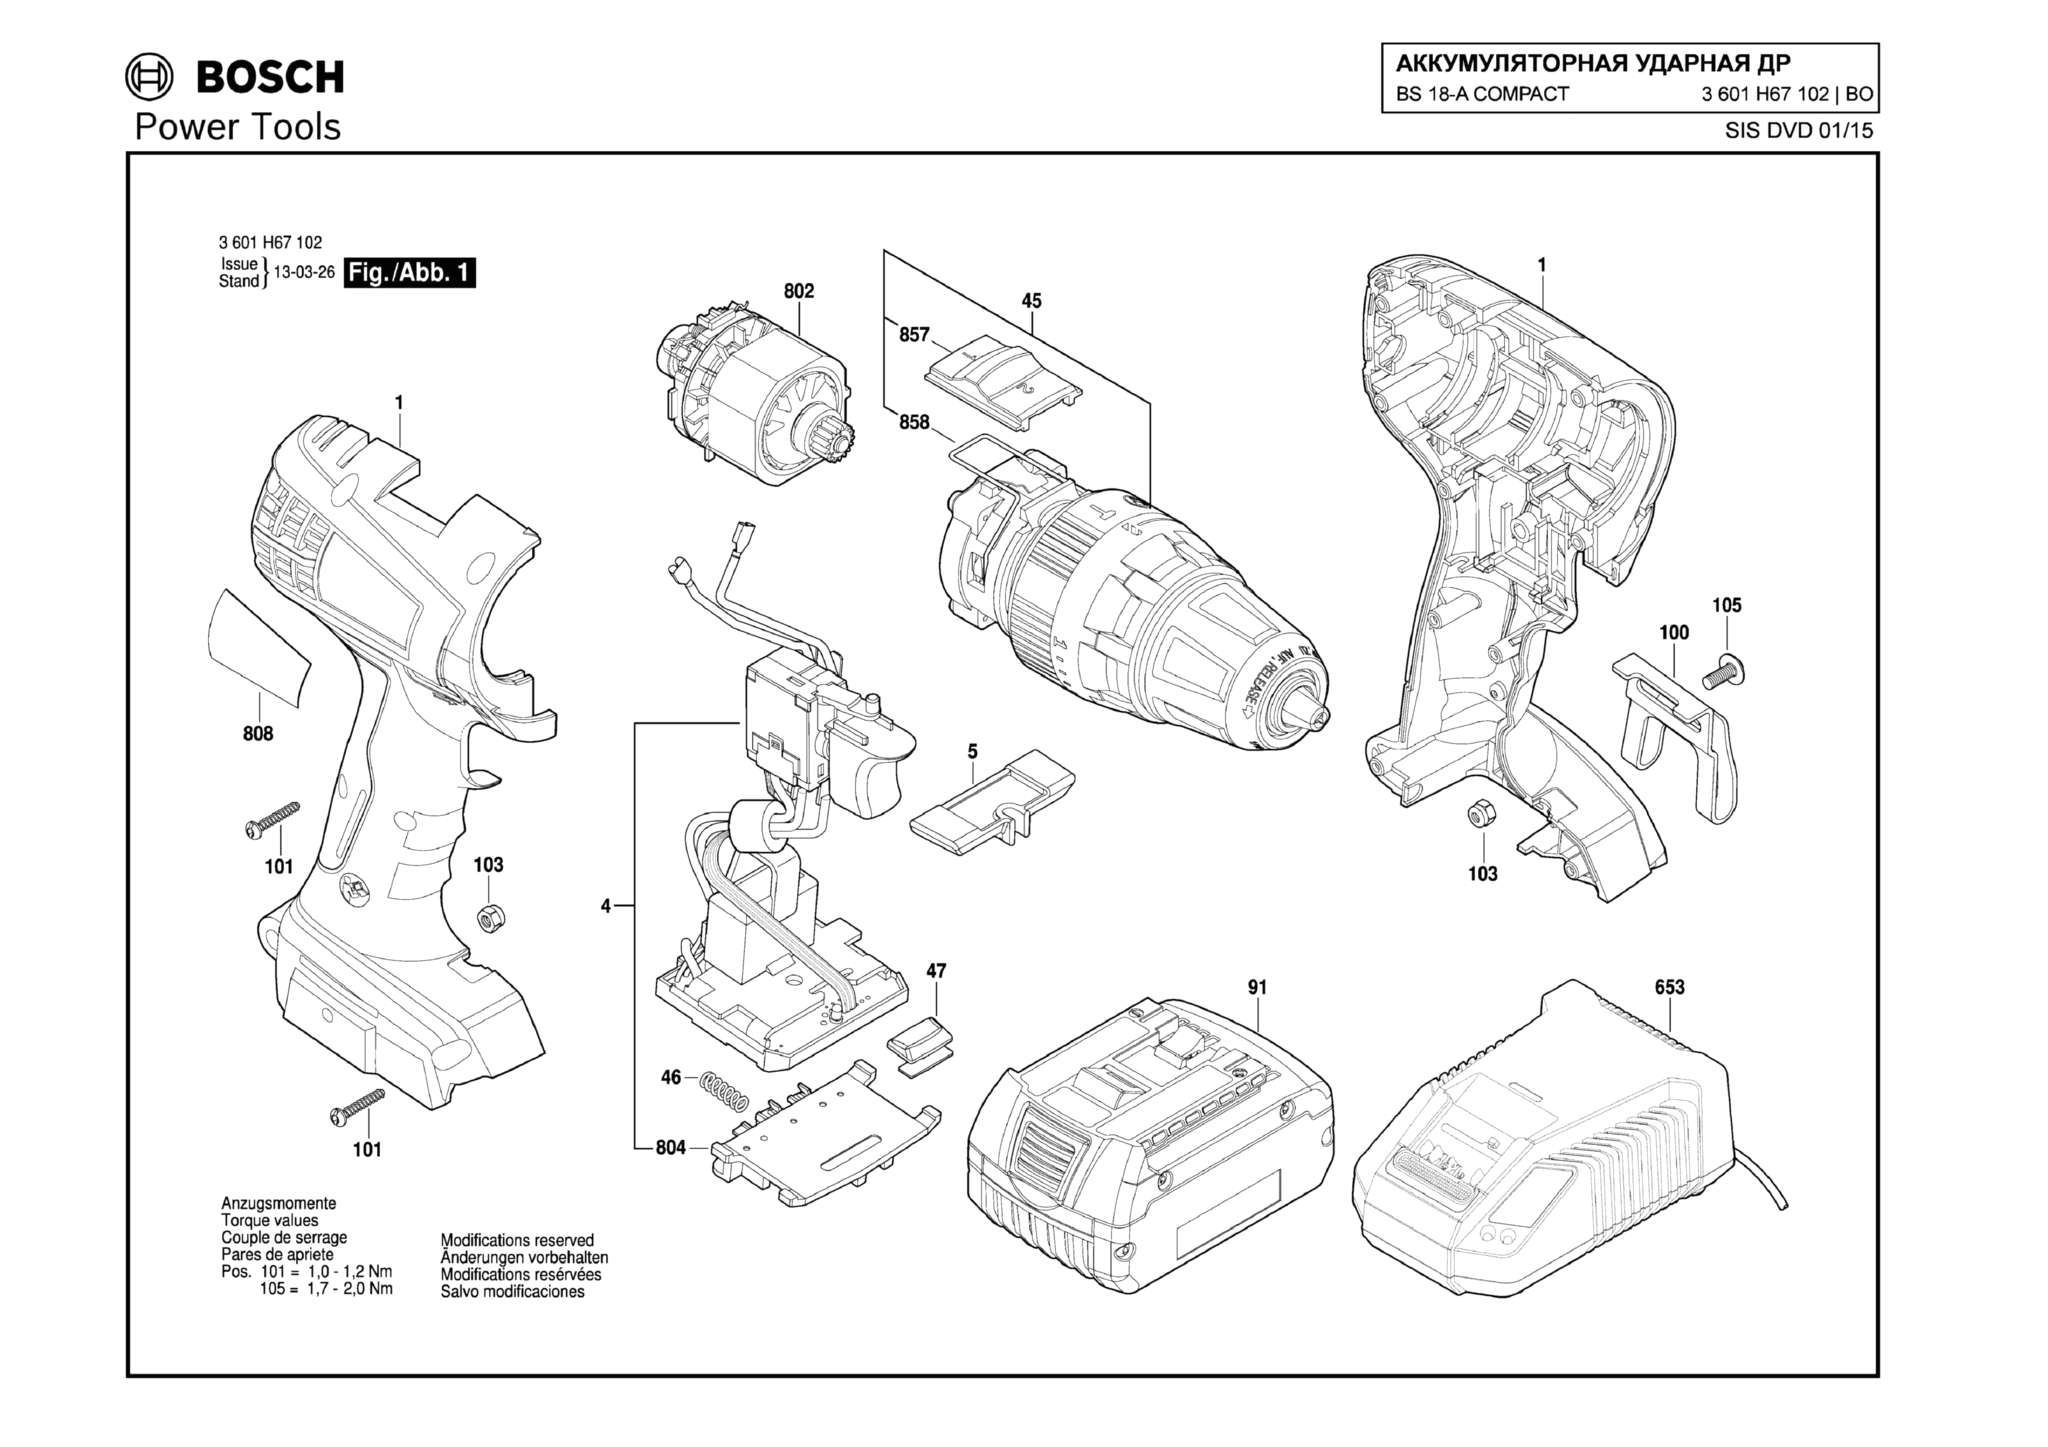 Запчасти, схема и деталировка Bosch BS 18-A COMPACT (ТИП 3601H67102)